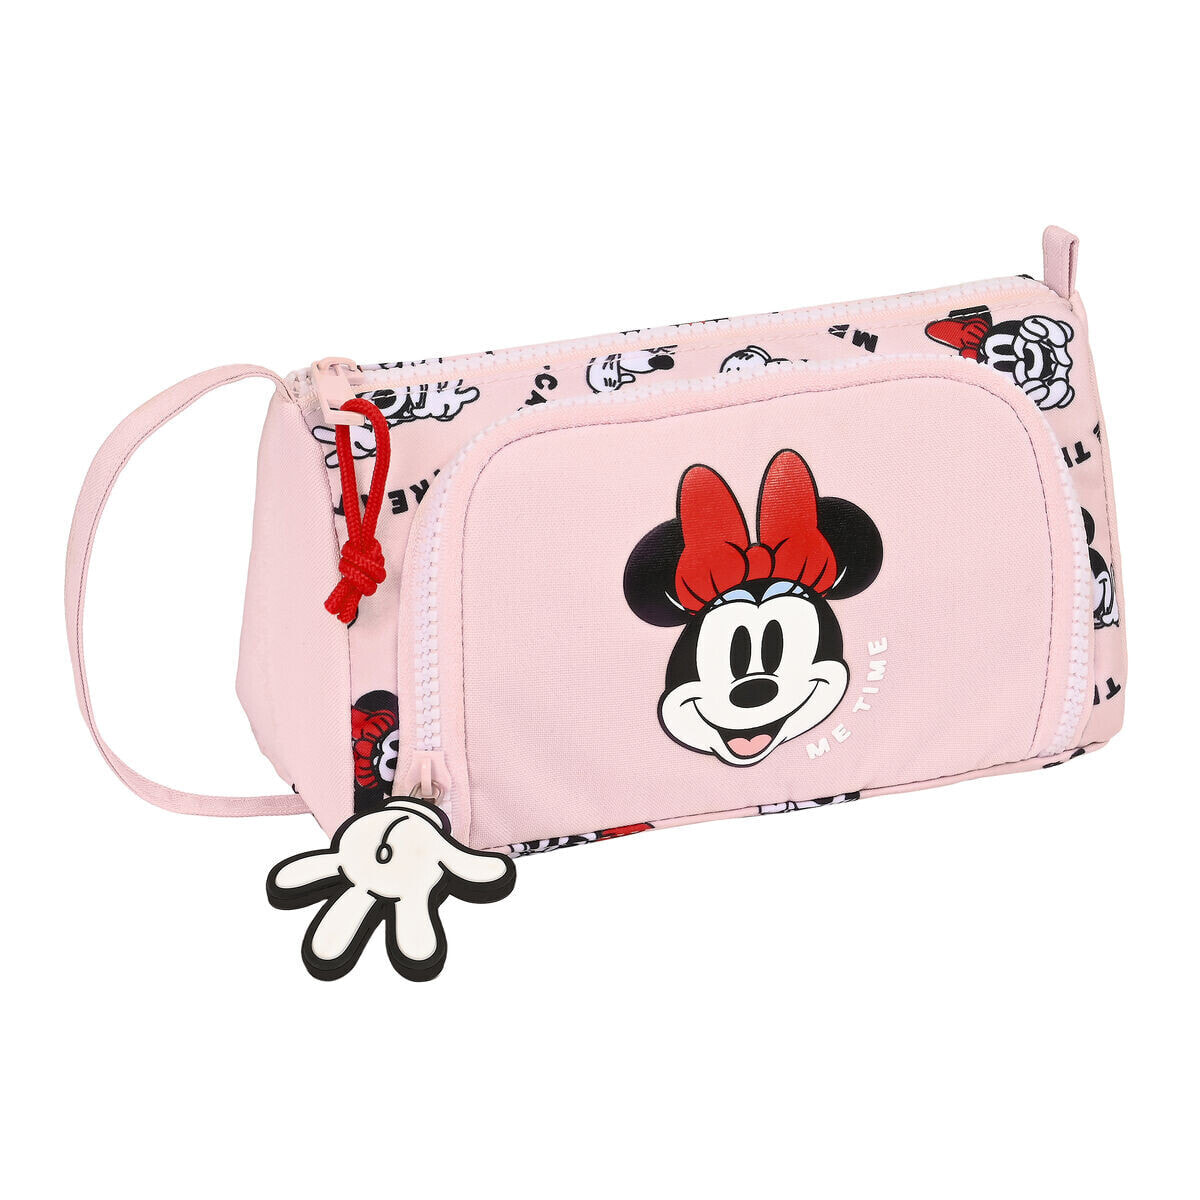 School Case Minnie Mouse Me time Pink 20 x 11 x 8.5 cm